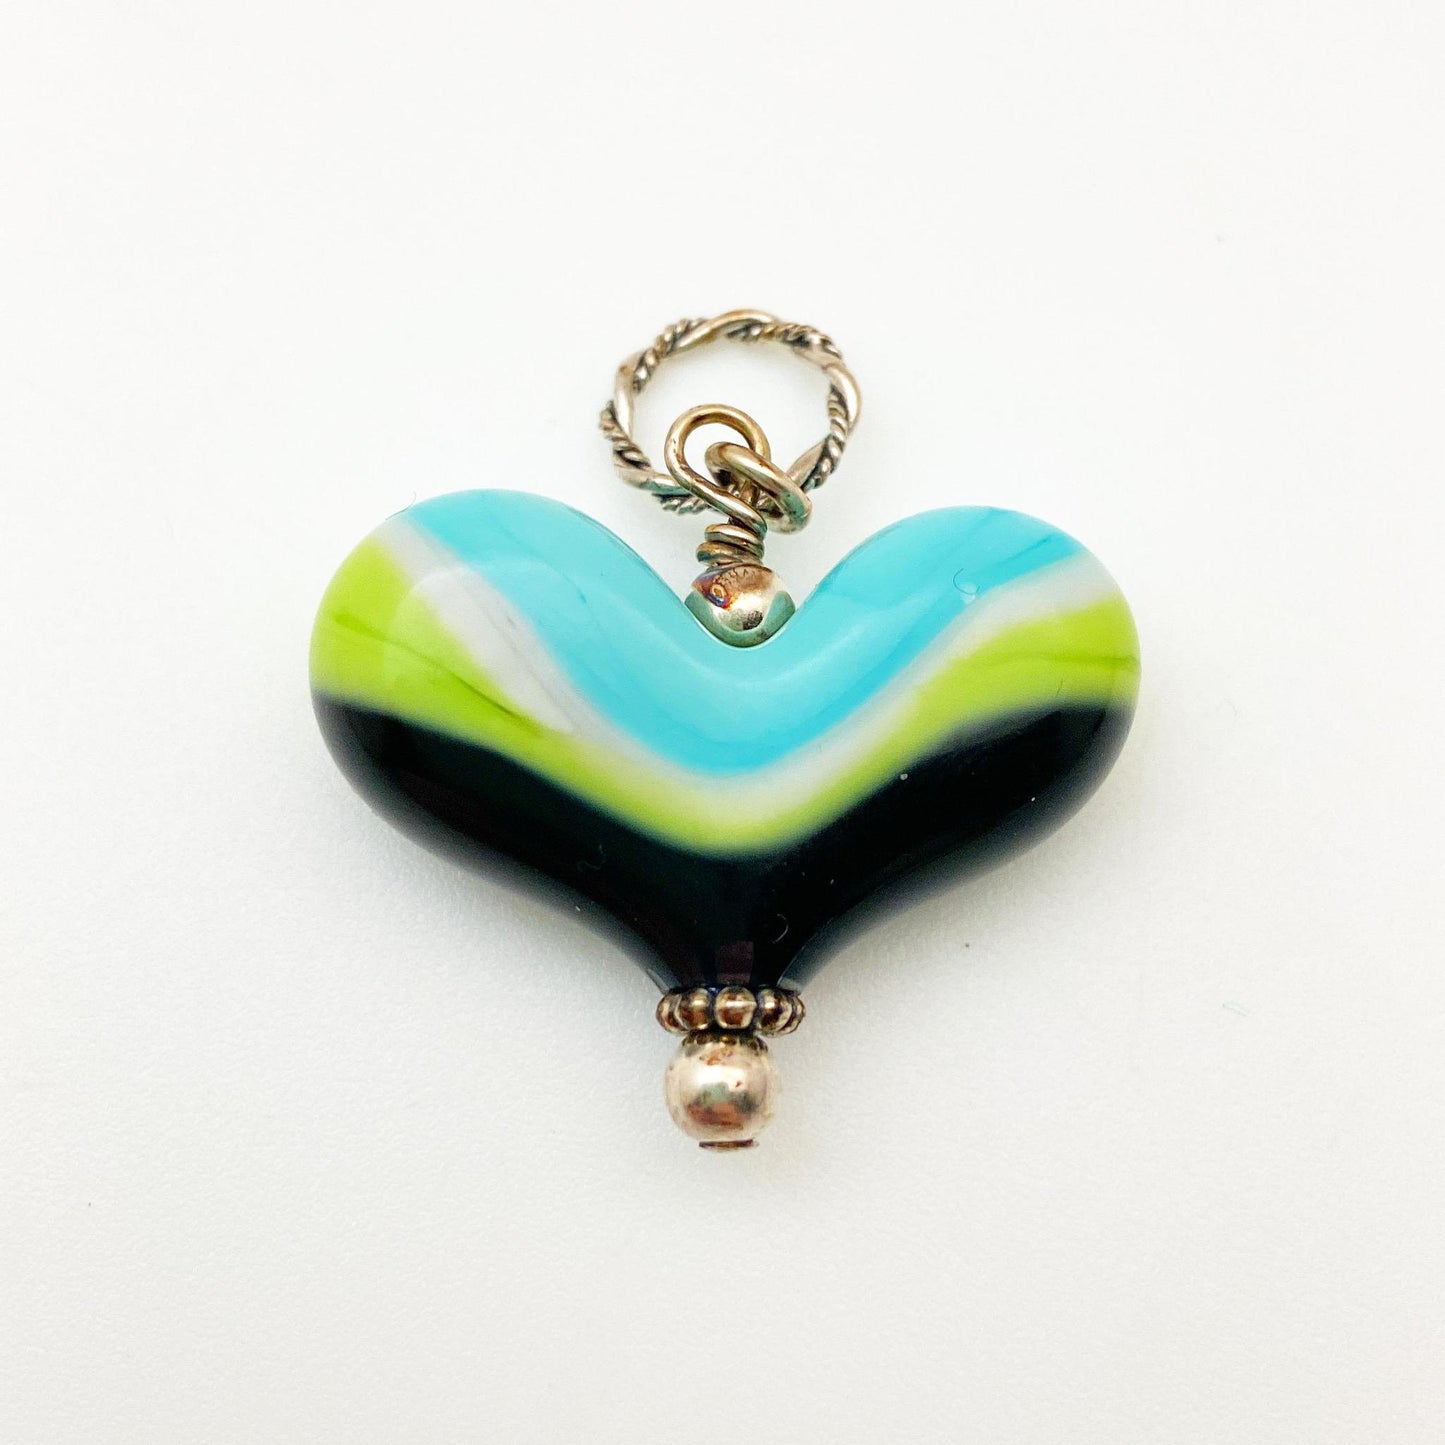 Pendant - Blue, Green, and Black Heart - Handmade Glass